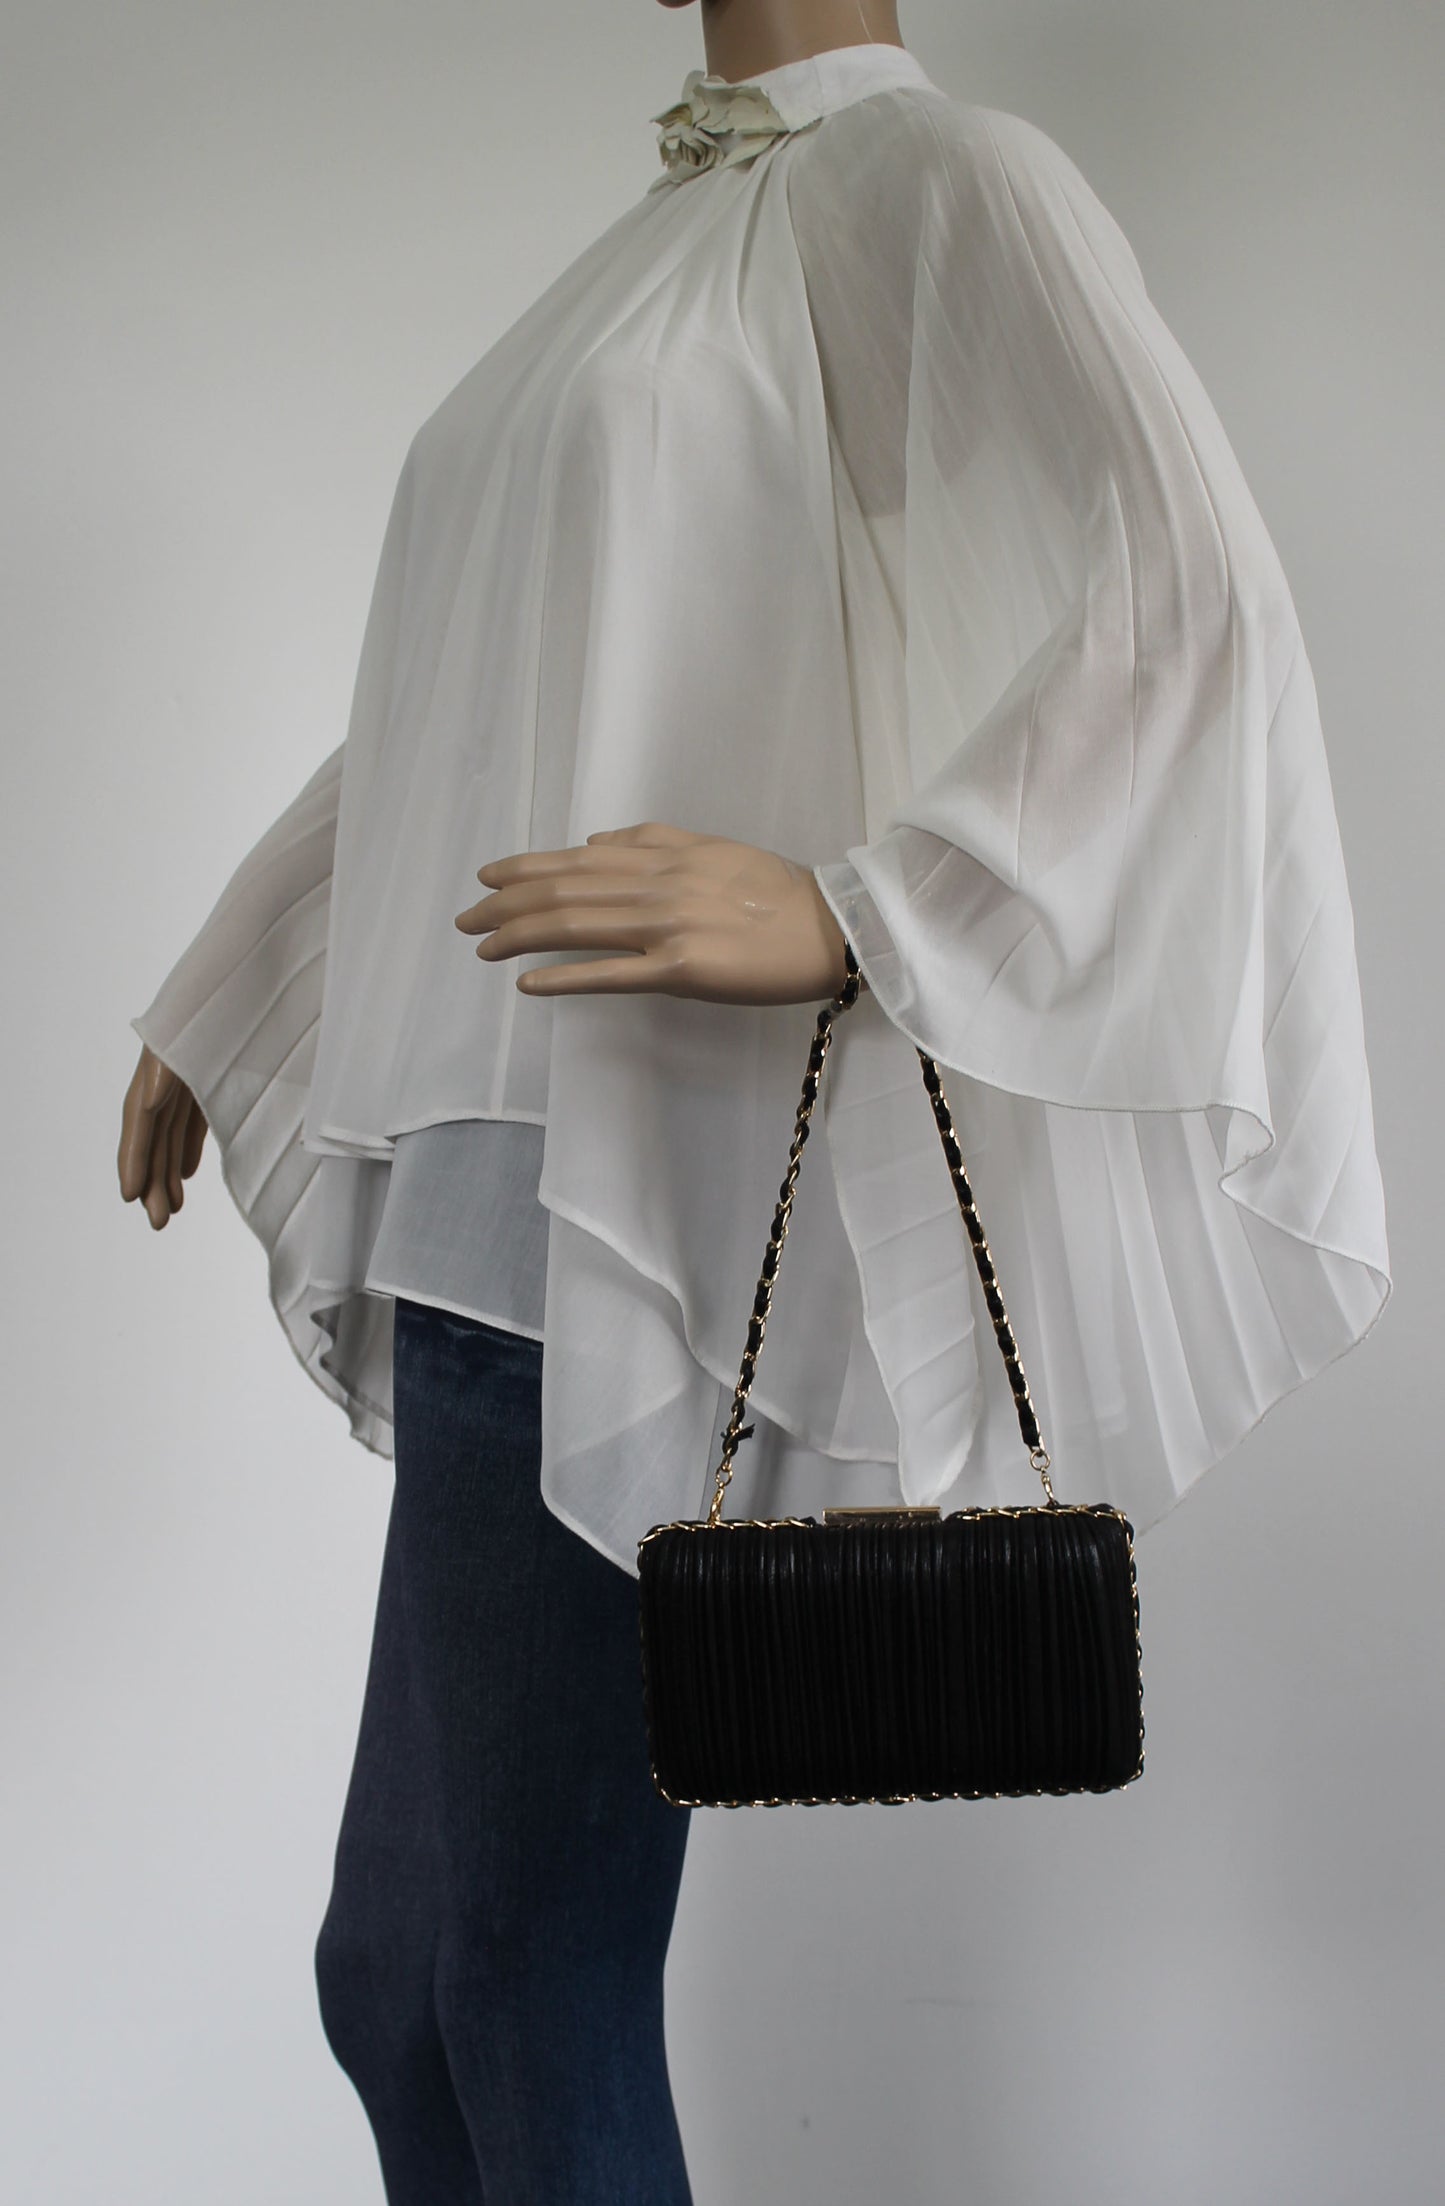 SWANKYSWANS Lacey Chain Clutch Bag Black Cute Cheap Clutch Bag For Weddings School and Work